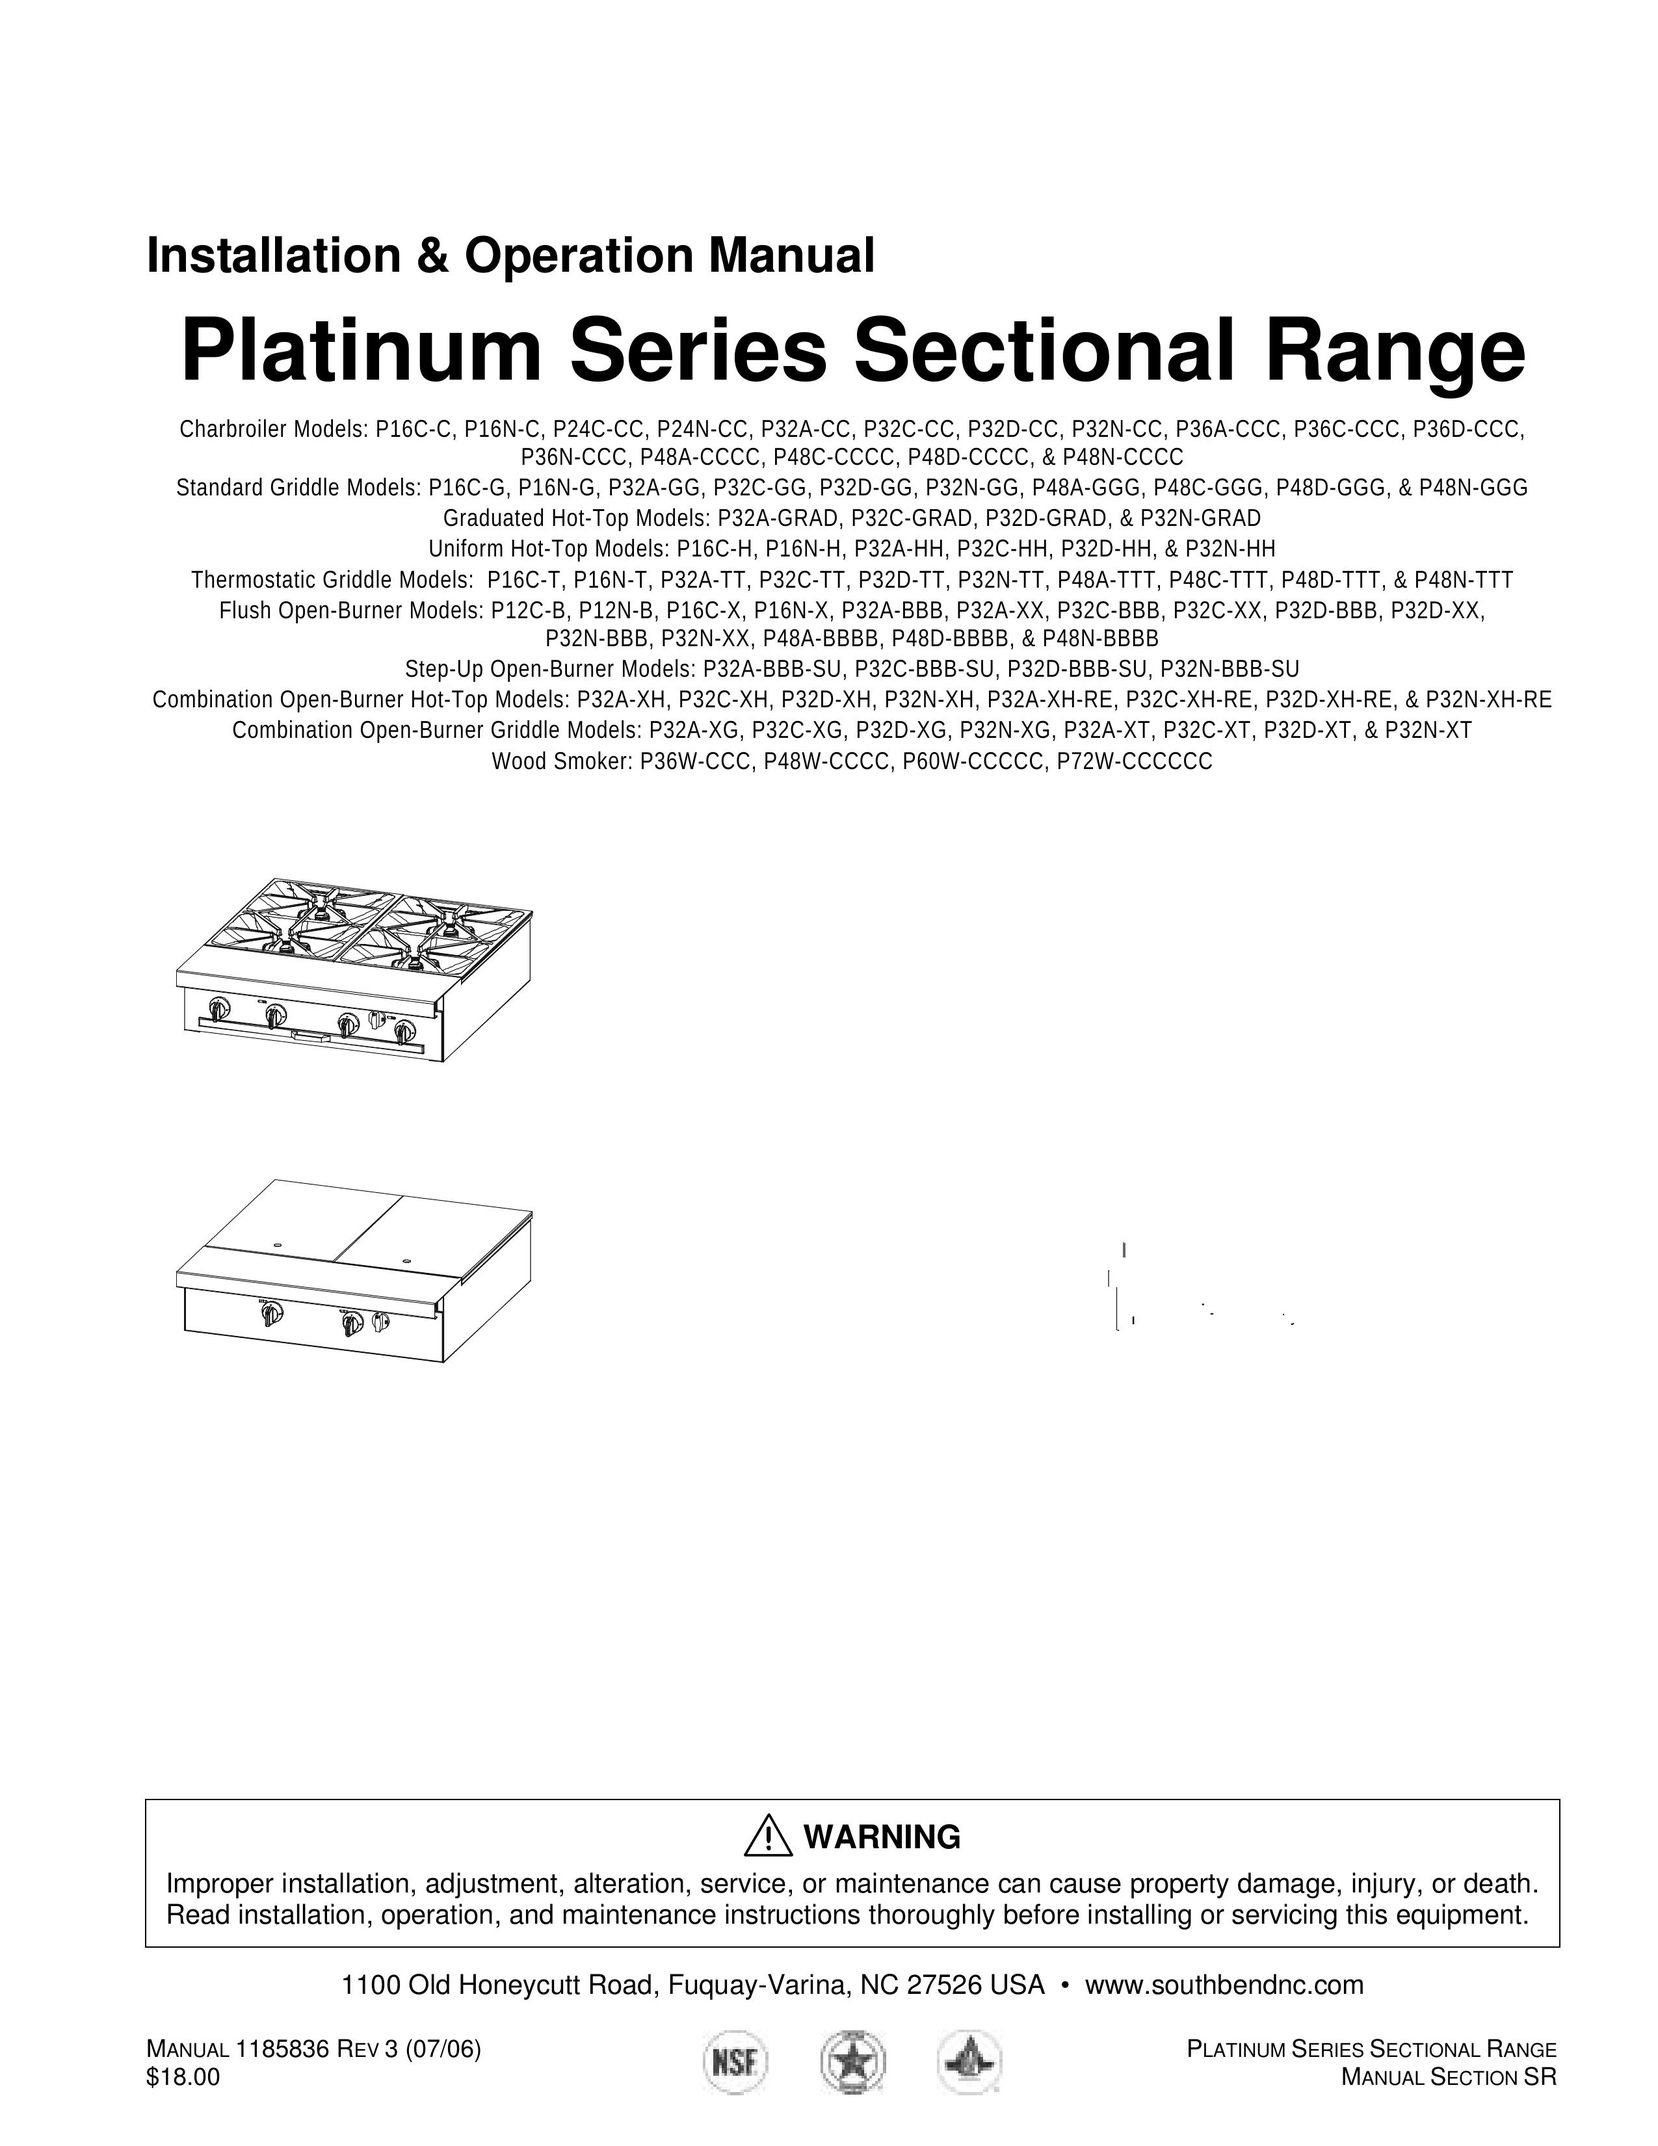 Southbend P12C-B Range User Manual